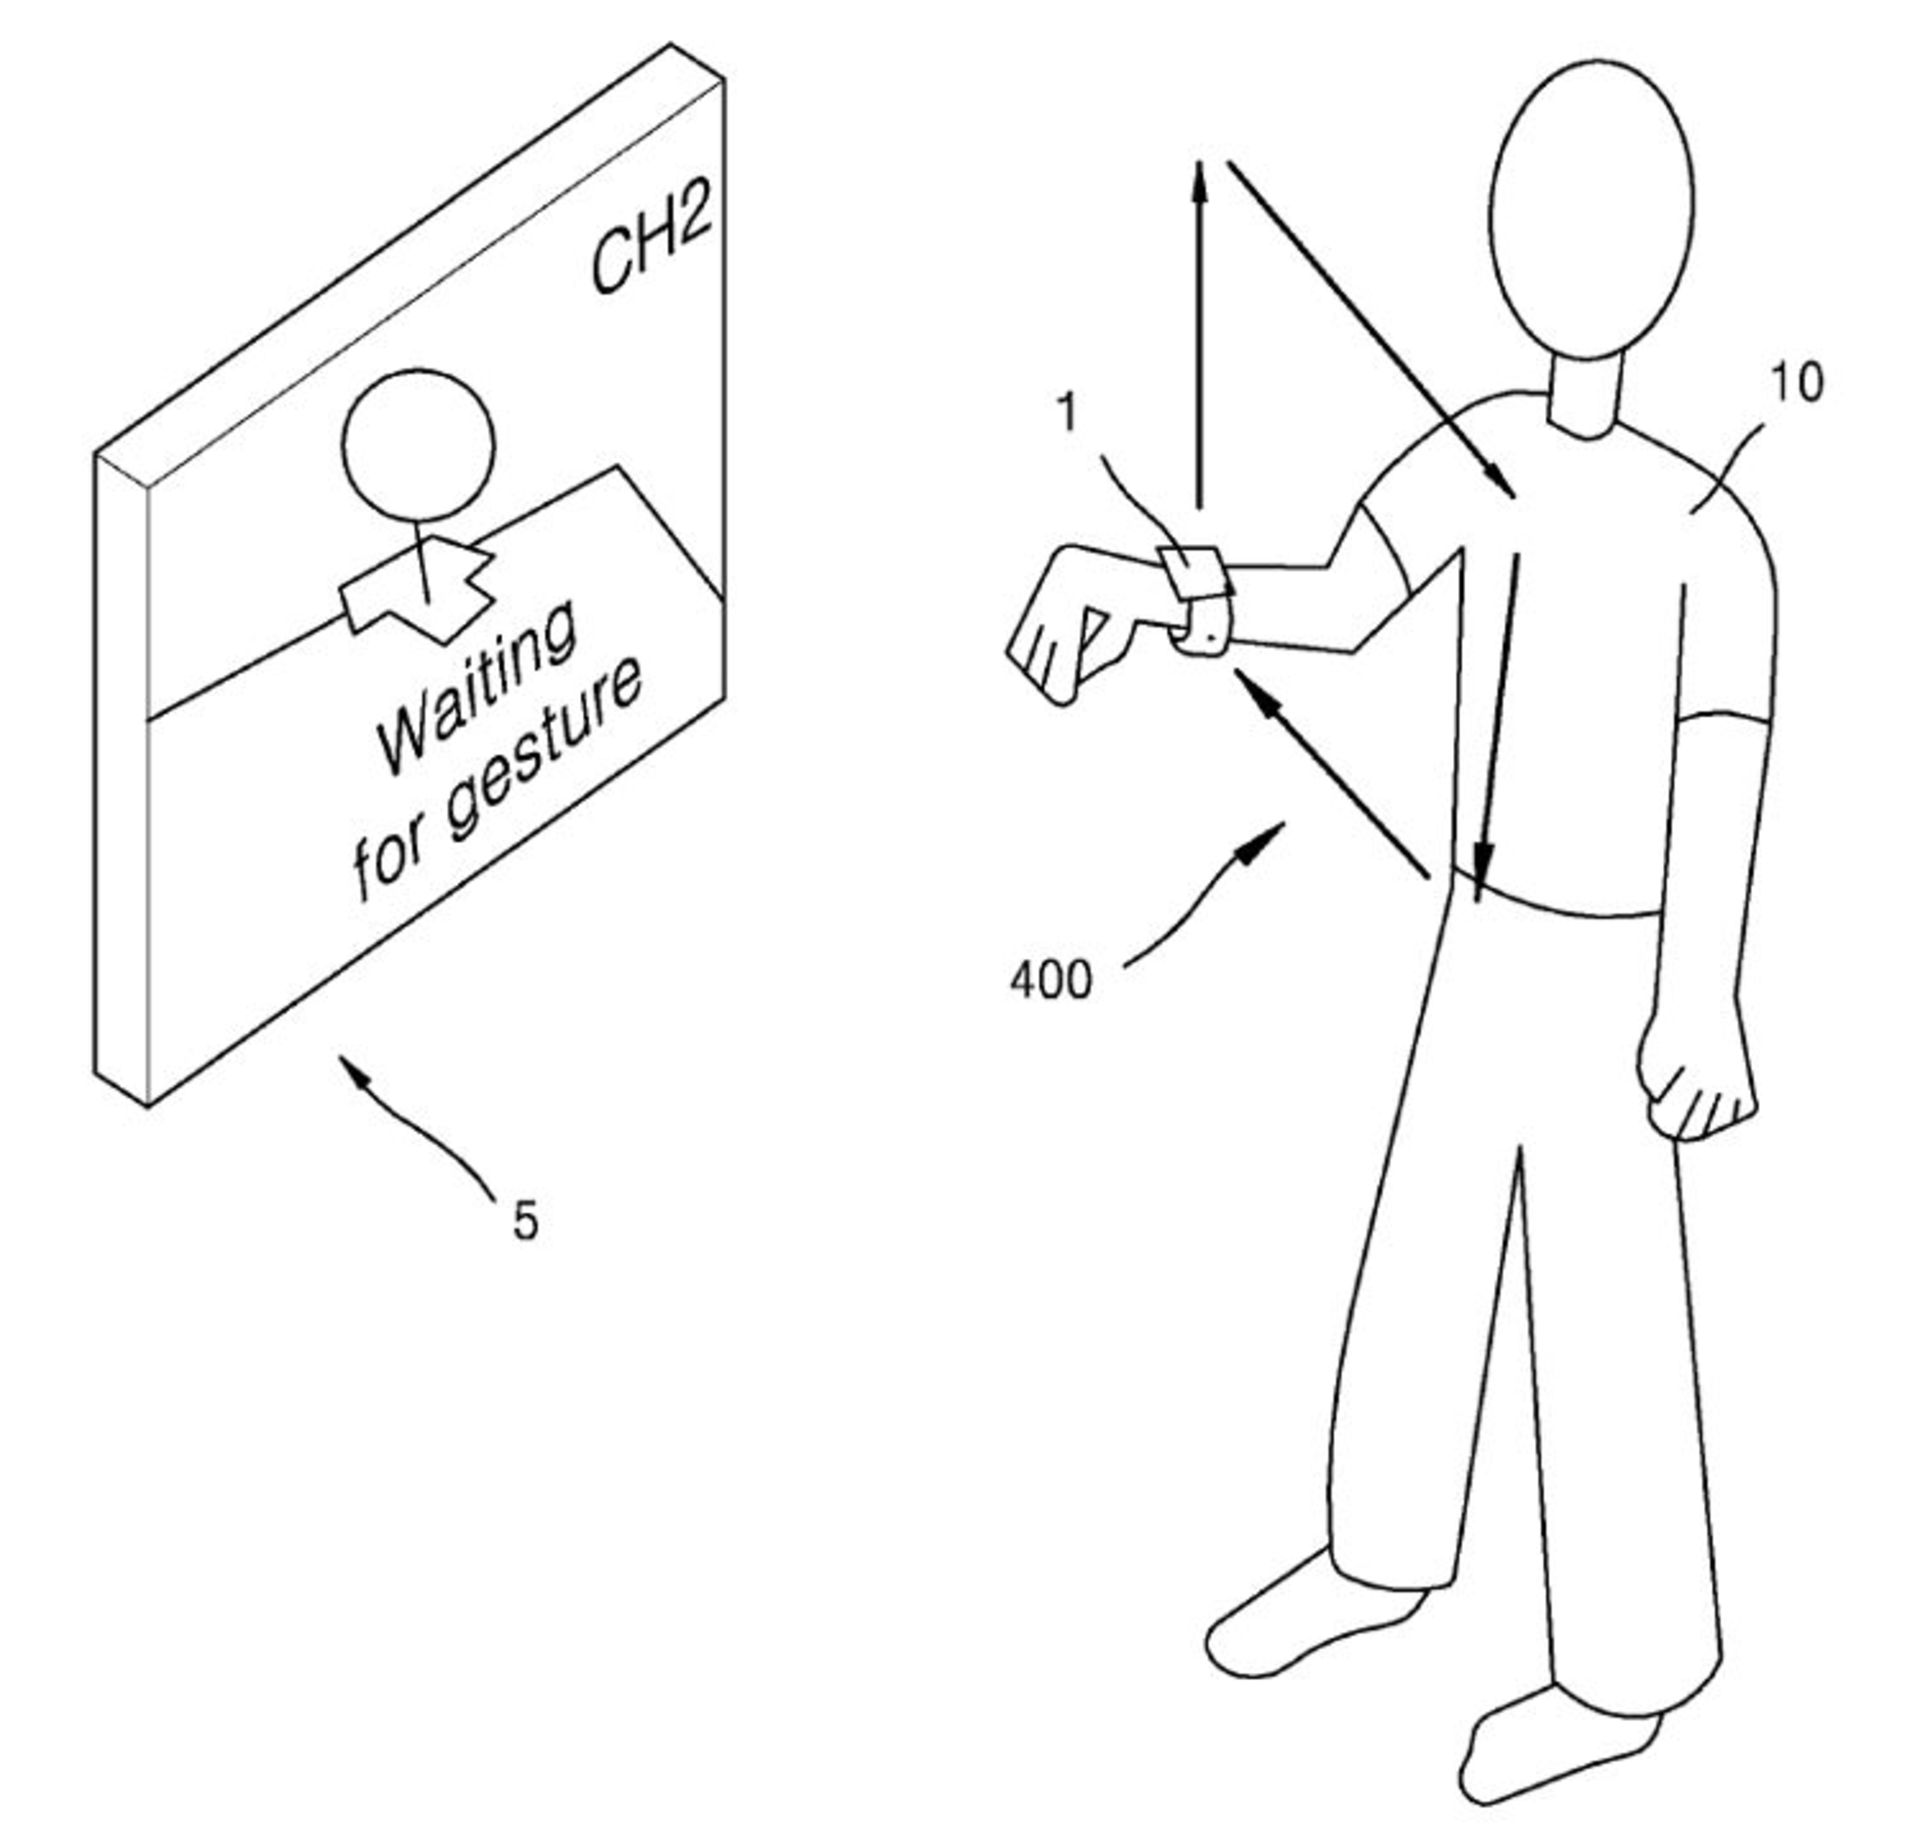 samsung watch gestures smart home patent 5 daad5